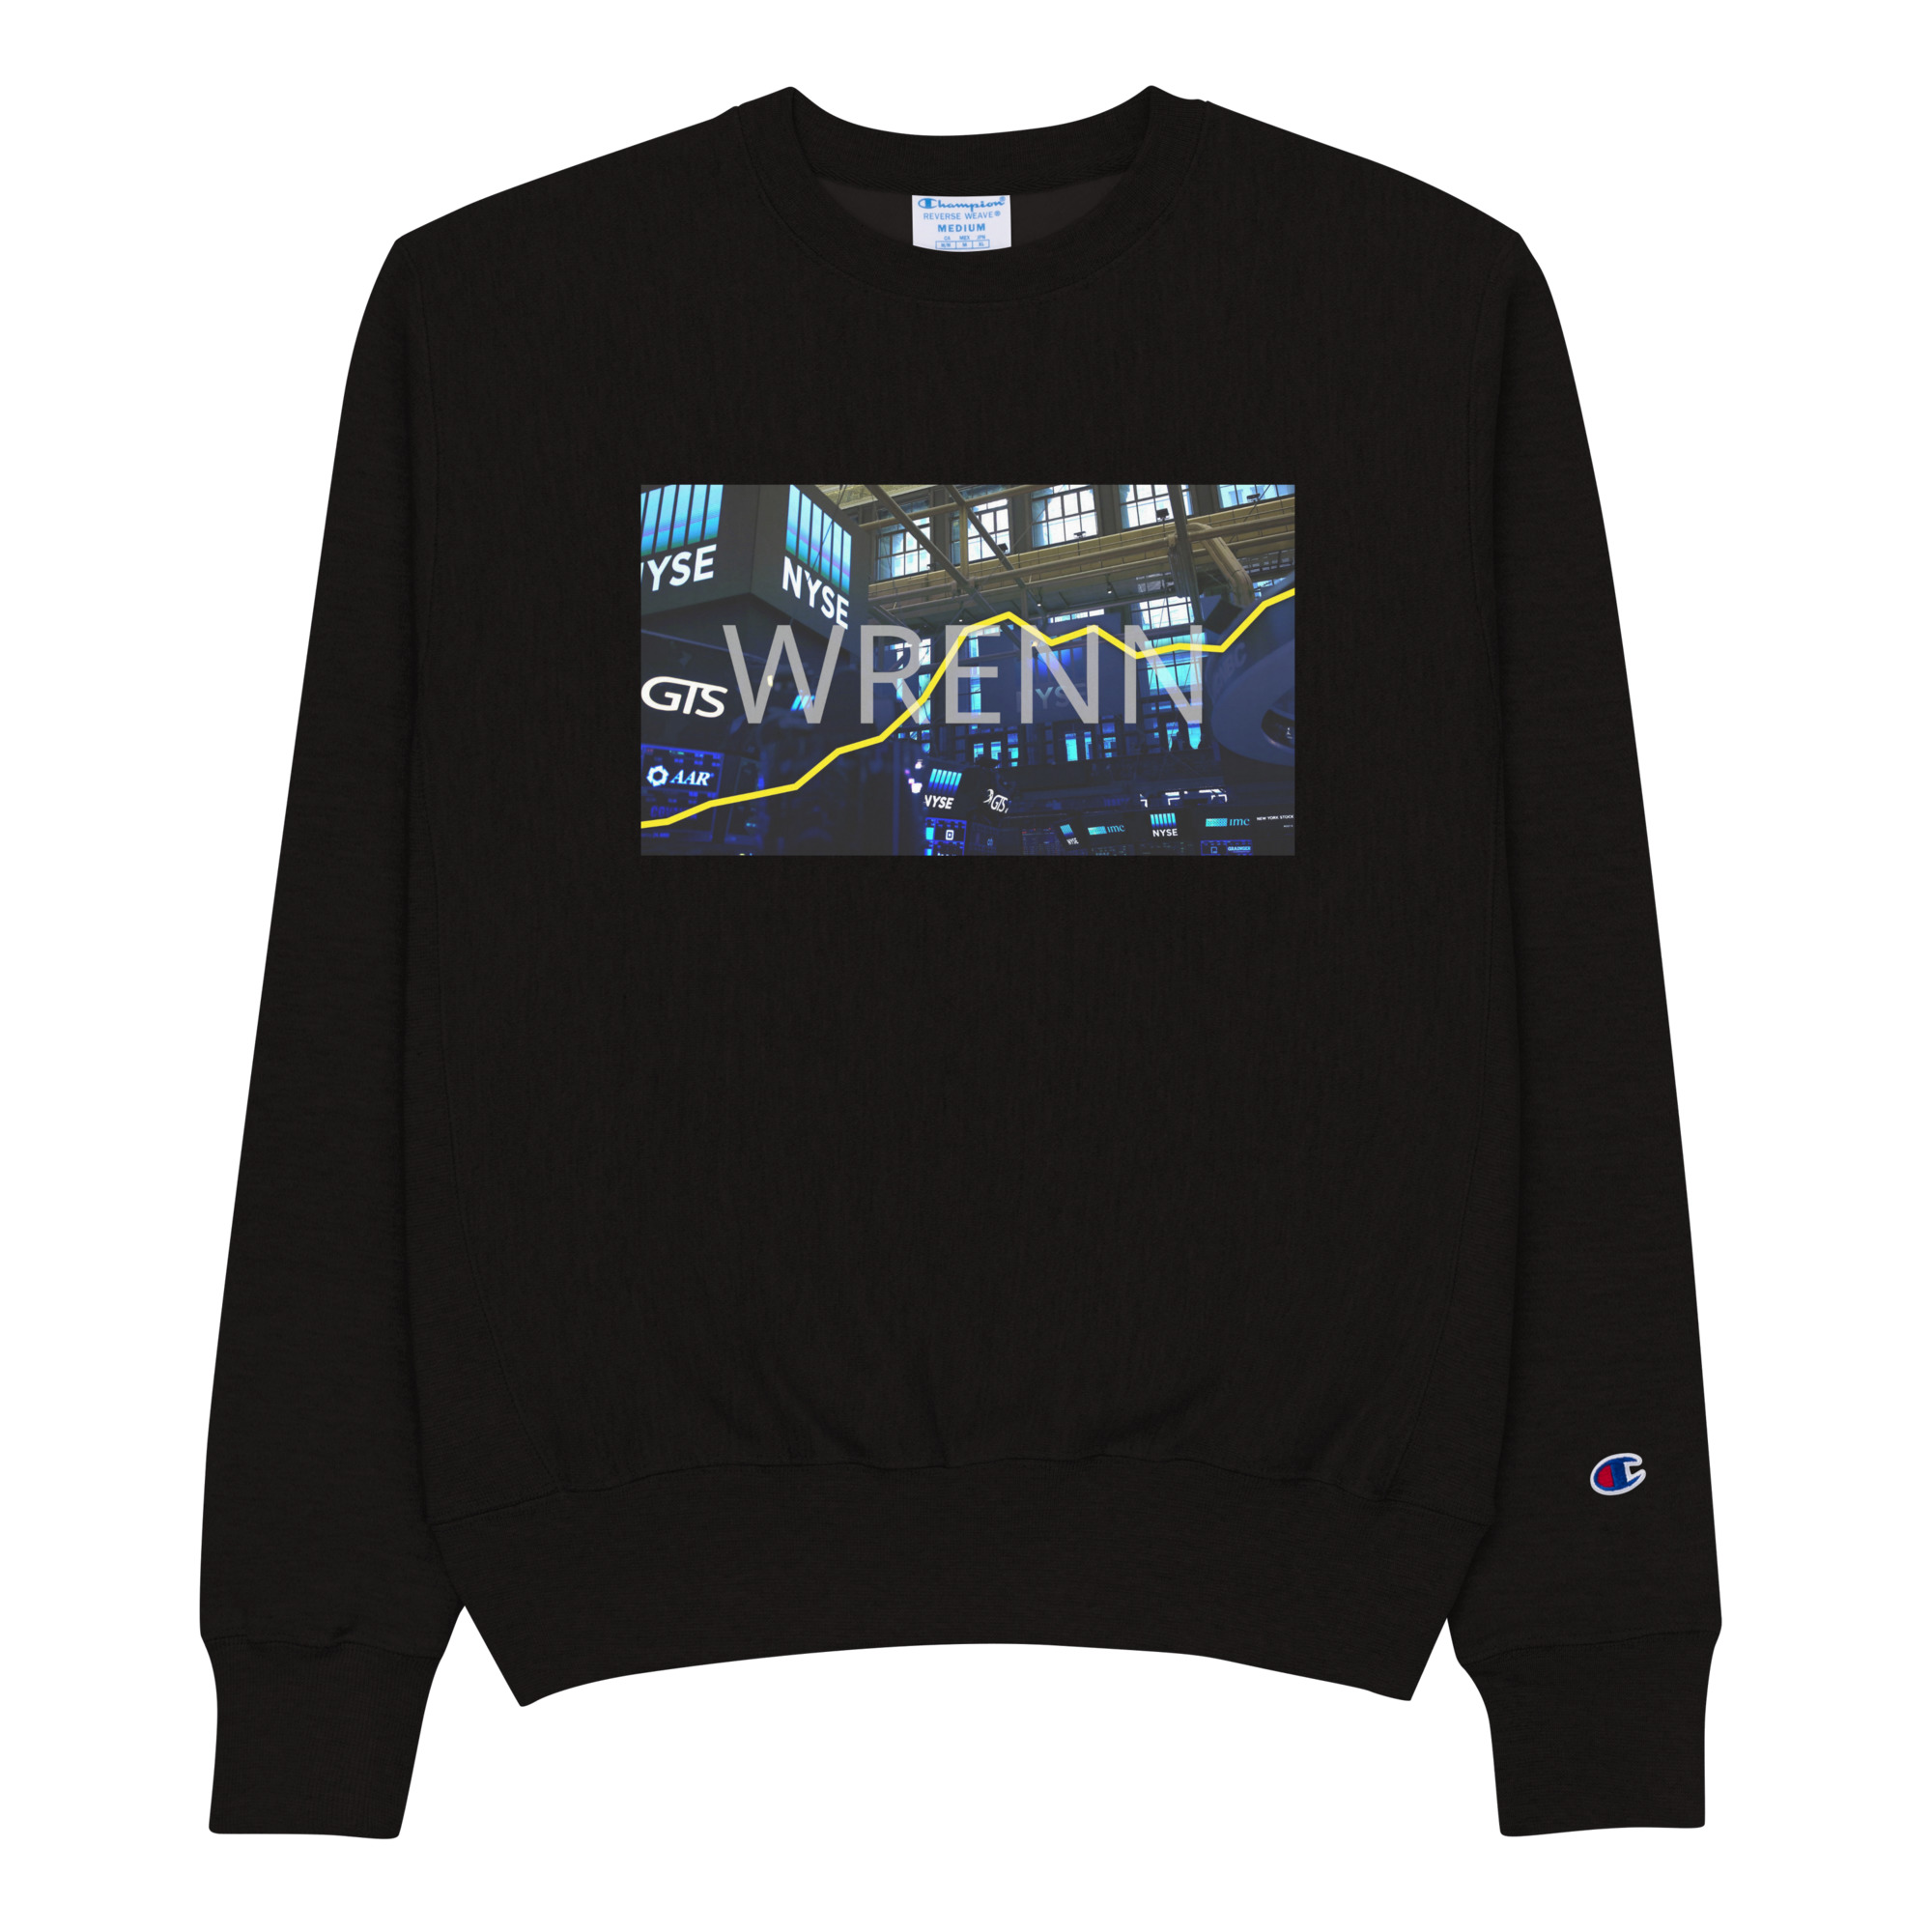 Wrenn New York Stock Exchange Champion Sweatshirt